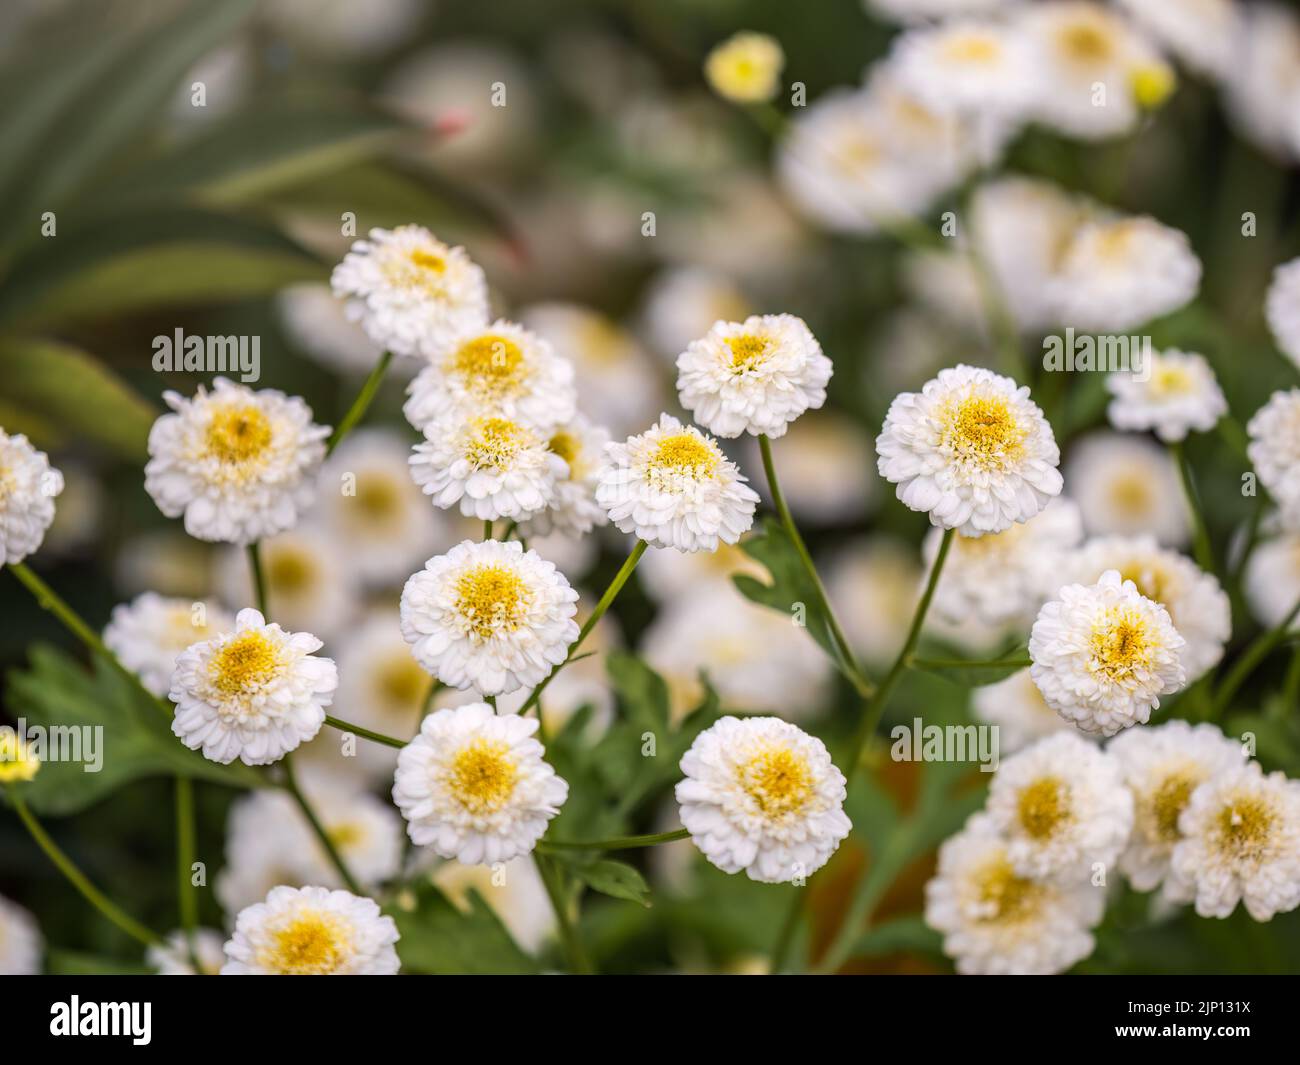 Colourful Feverfew Flowers, Tanacetum parthenium. Beautiful white and yellow flowers Tanacetum parthenium. Stock Photo